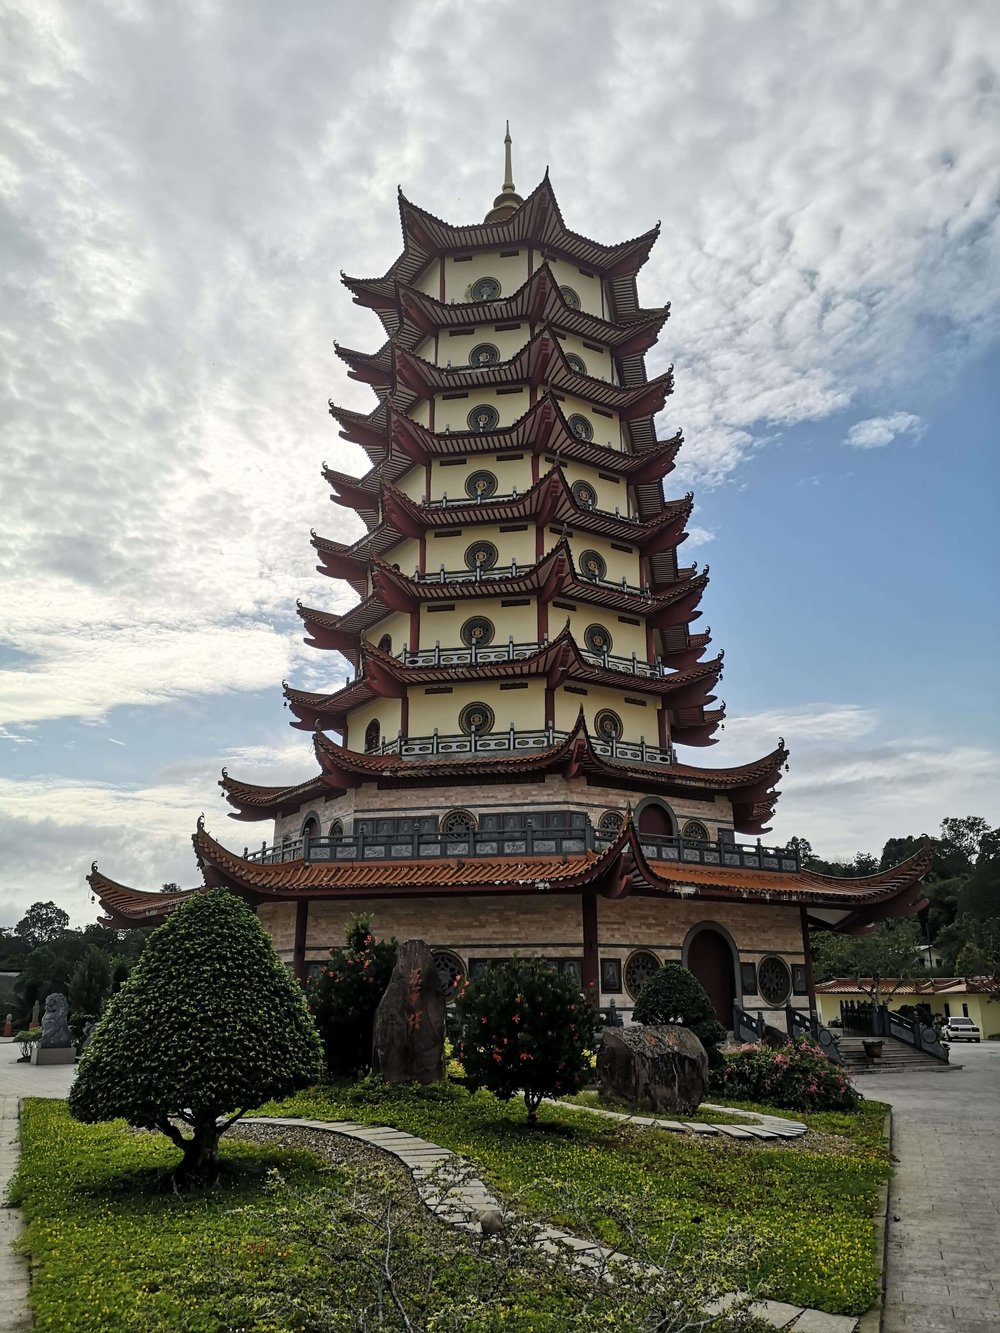 that pagoda